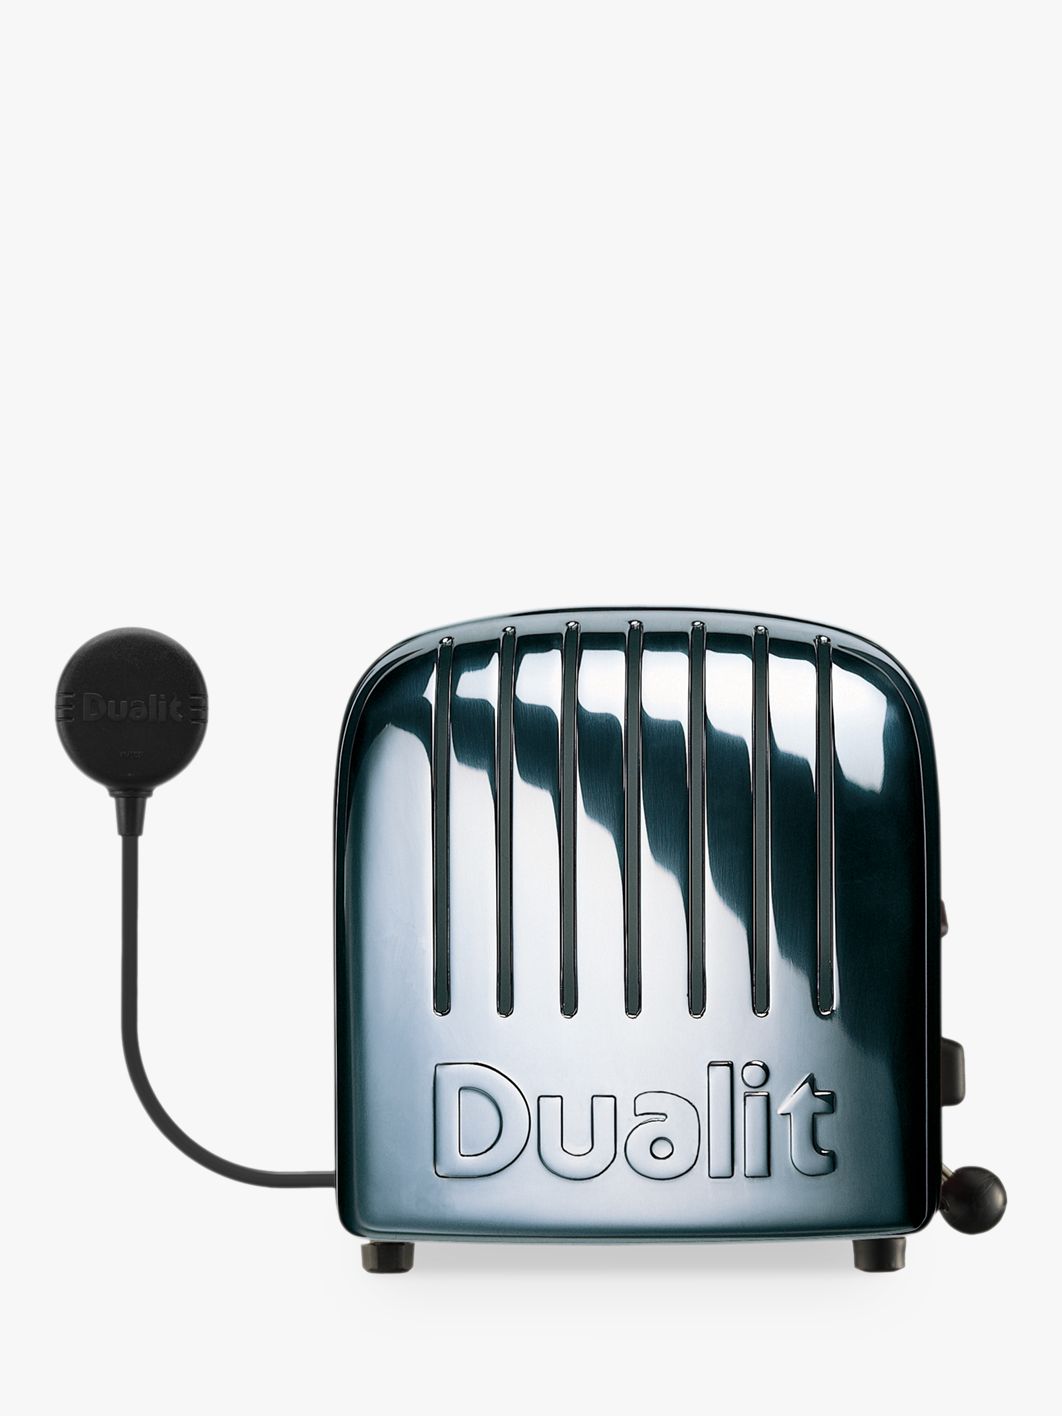 Dualit 2 slice toaster, Chrome